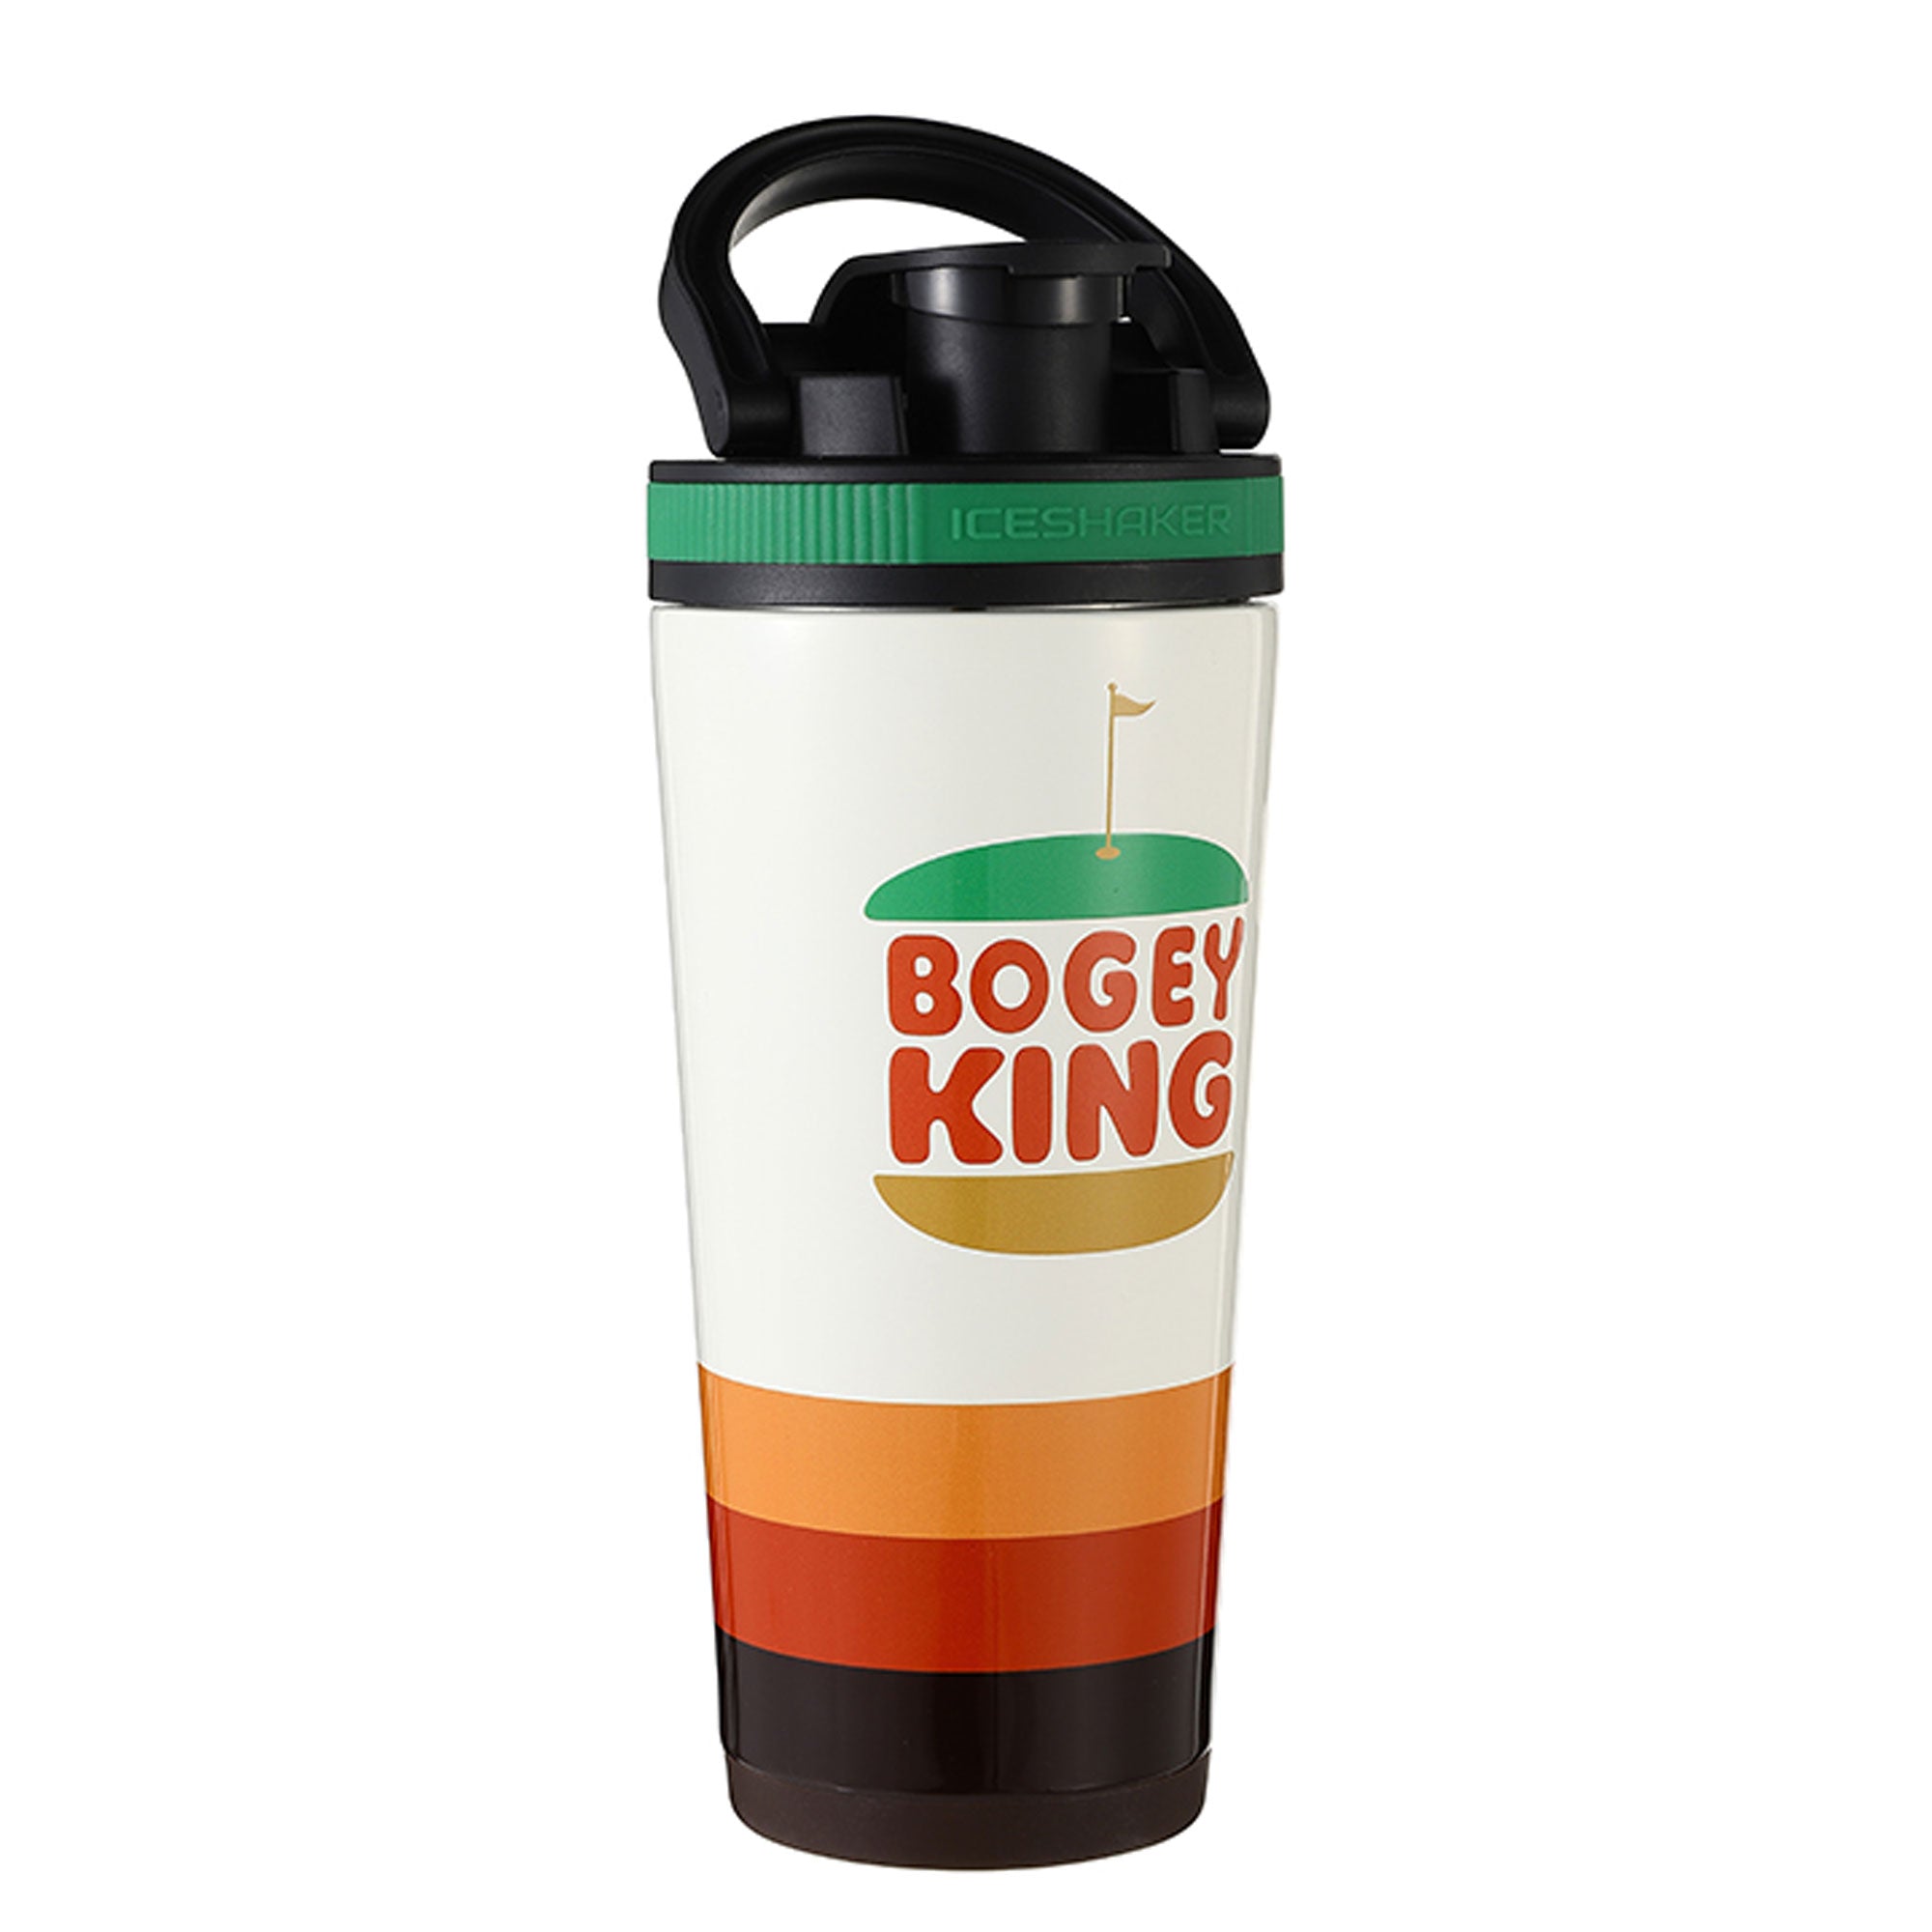 Golf Series 26oz Protein Ice Shaker Bottle: Bogey King